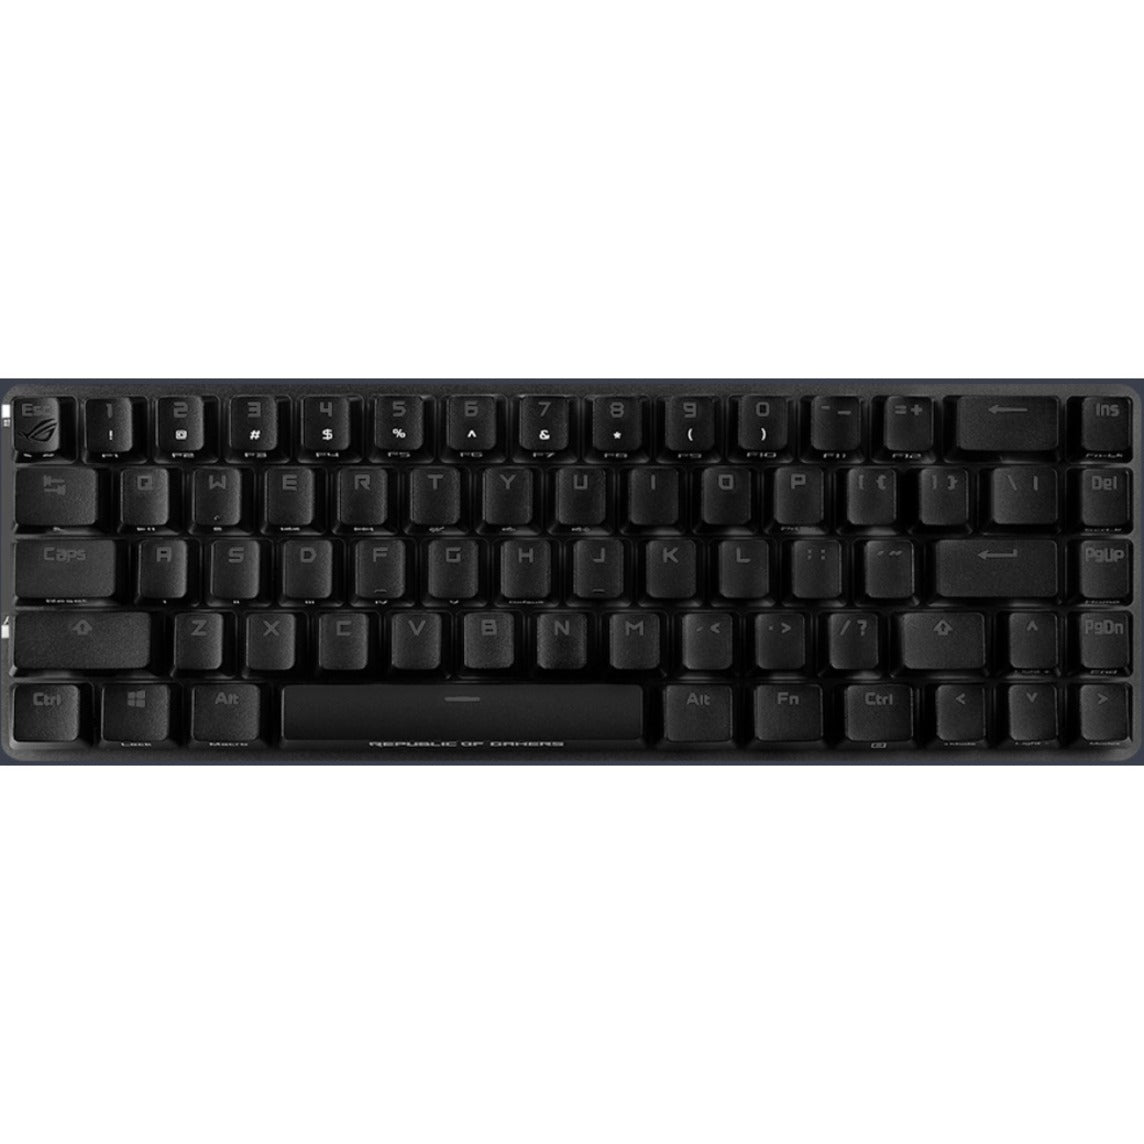 Asus ROG M601 ROG FALCHION/BL/US Falchion Gaming Keyboard, Compact 68-Key Mechanical/MX, RGB LED Backlight, Wireless/Wired, USB Interface